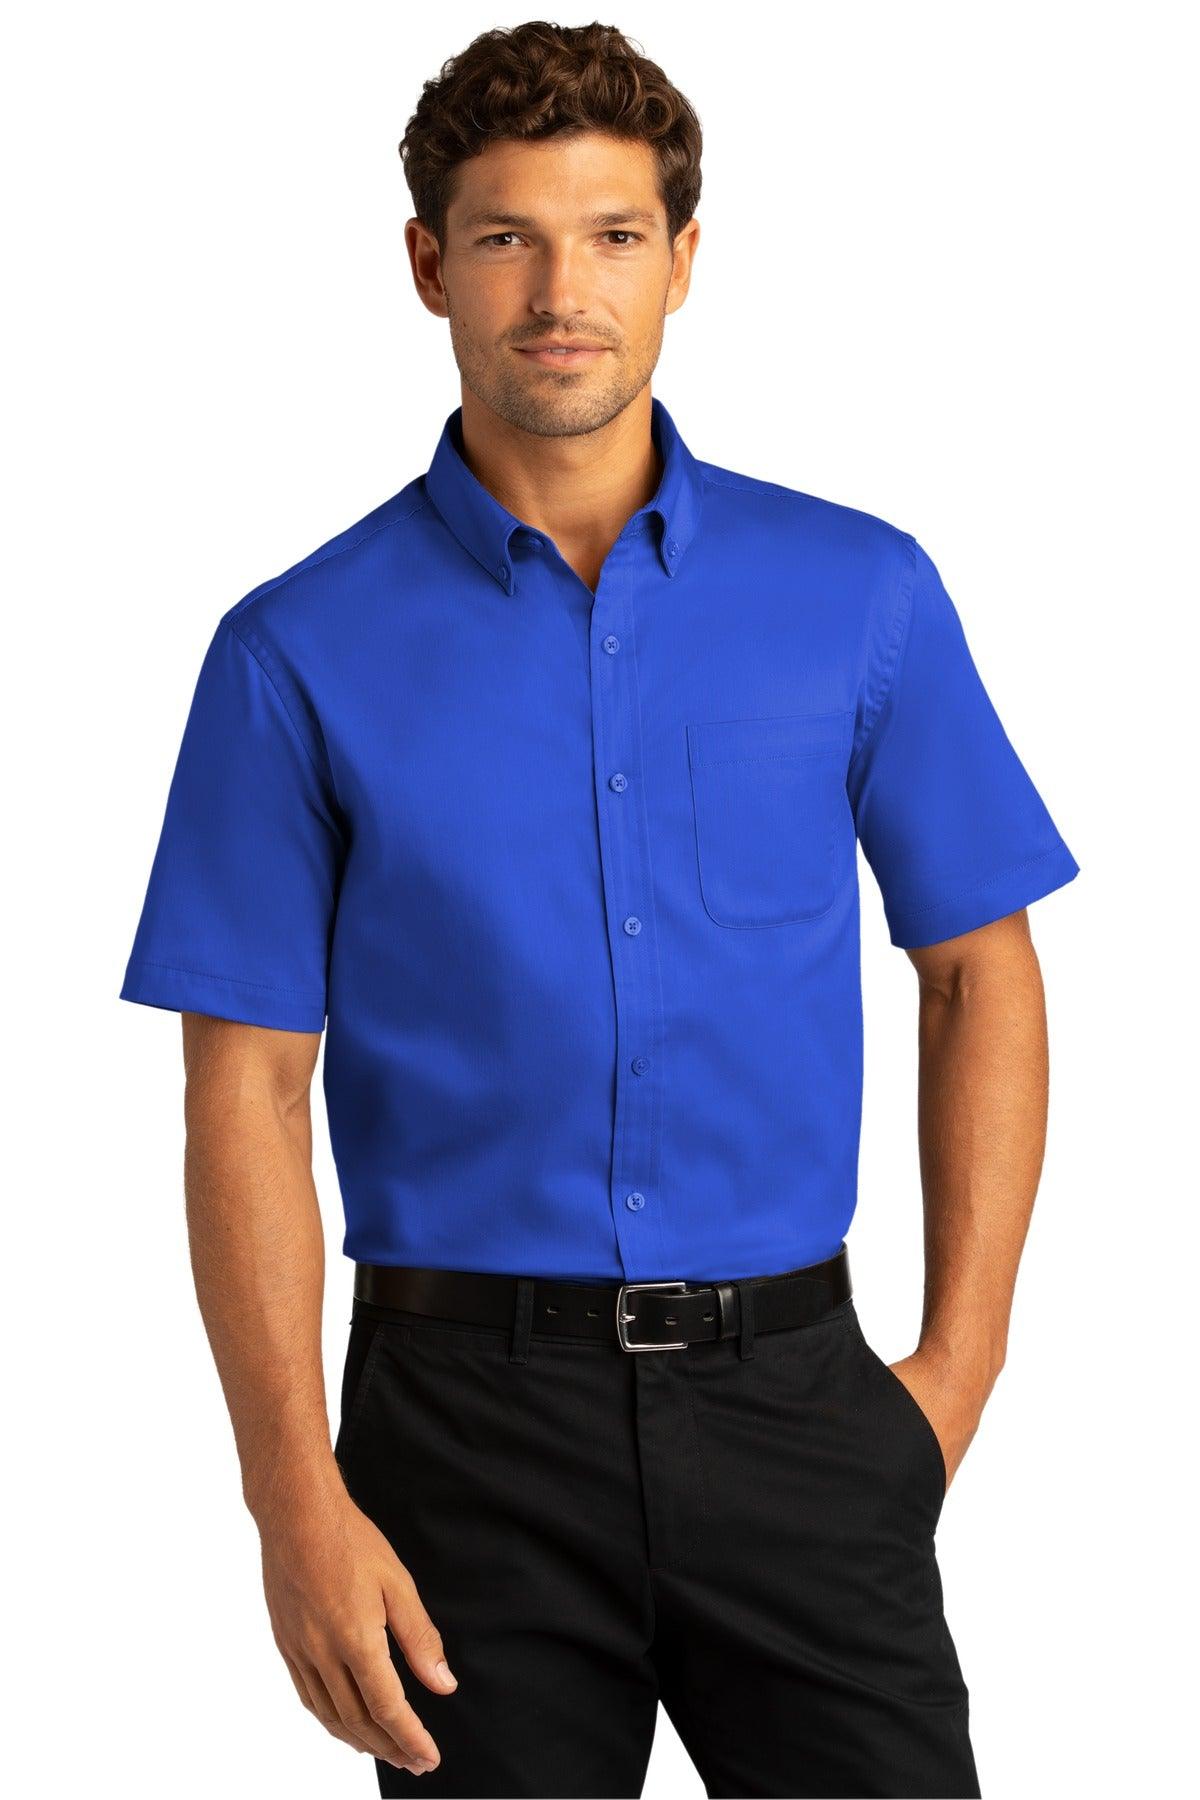 Port Authority Short Sleeve SuperPro React Twill Shirt. W809 - Dresses Max